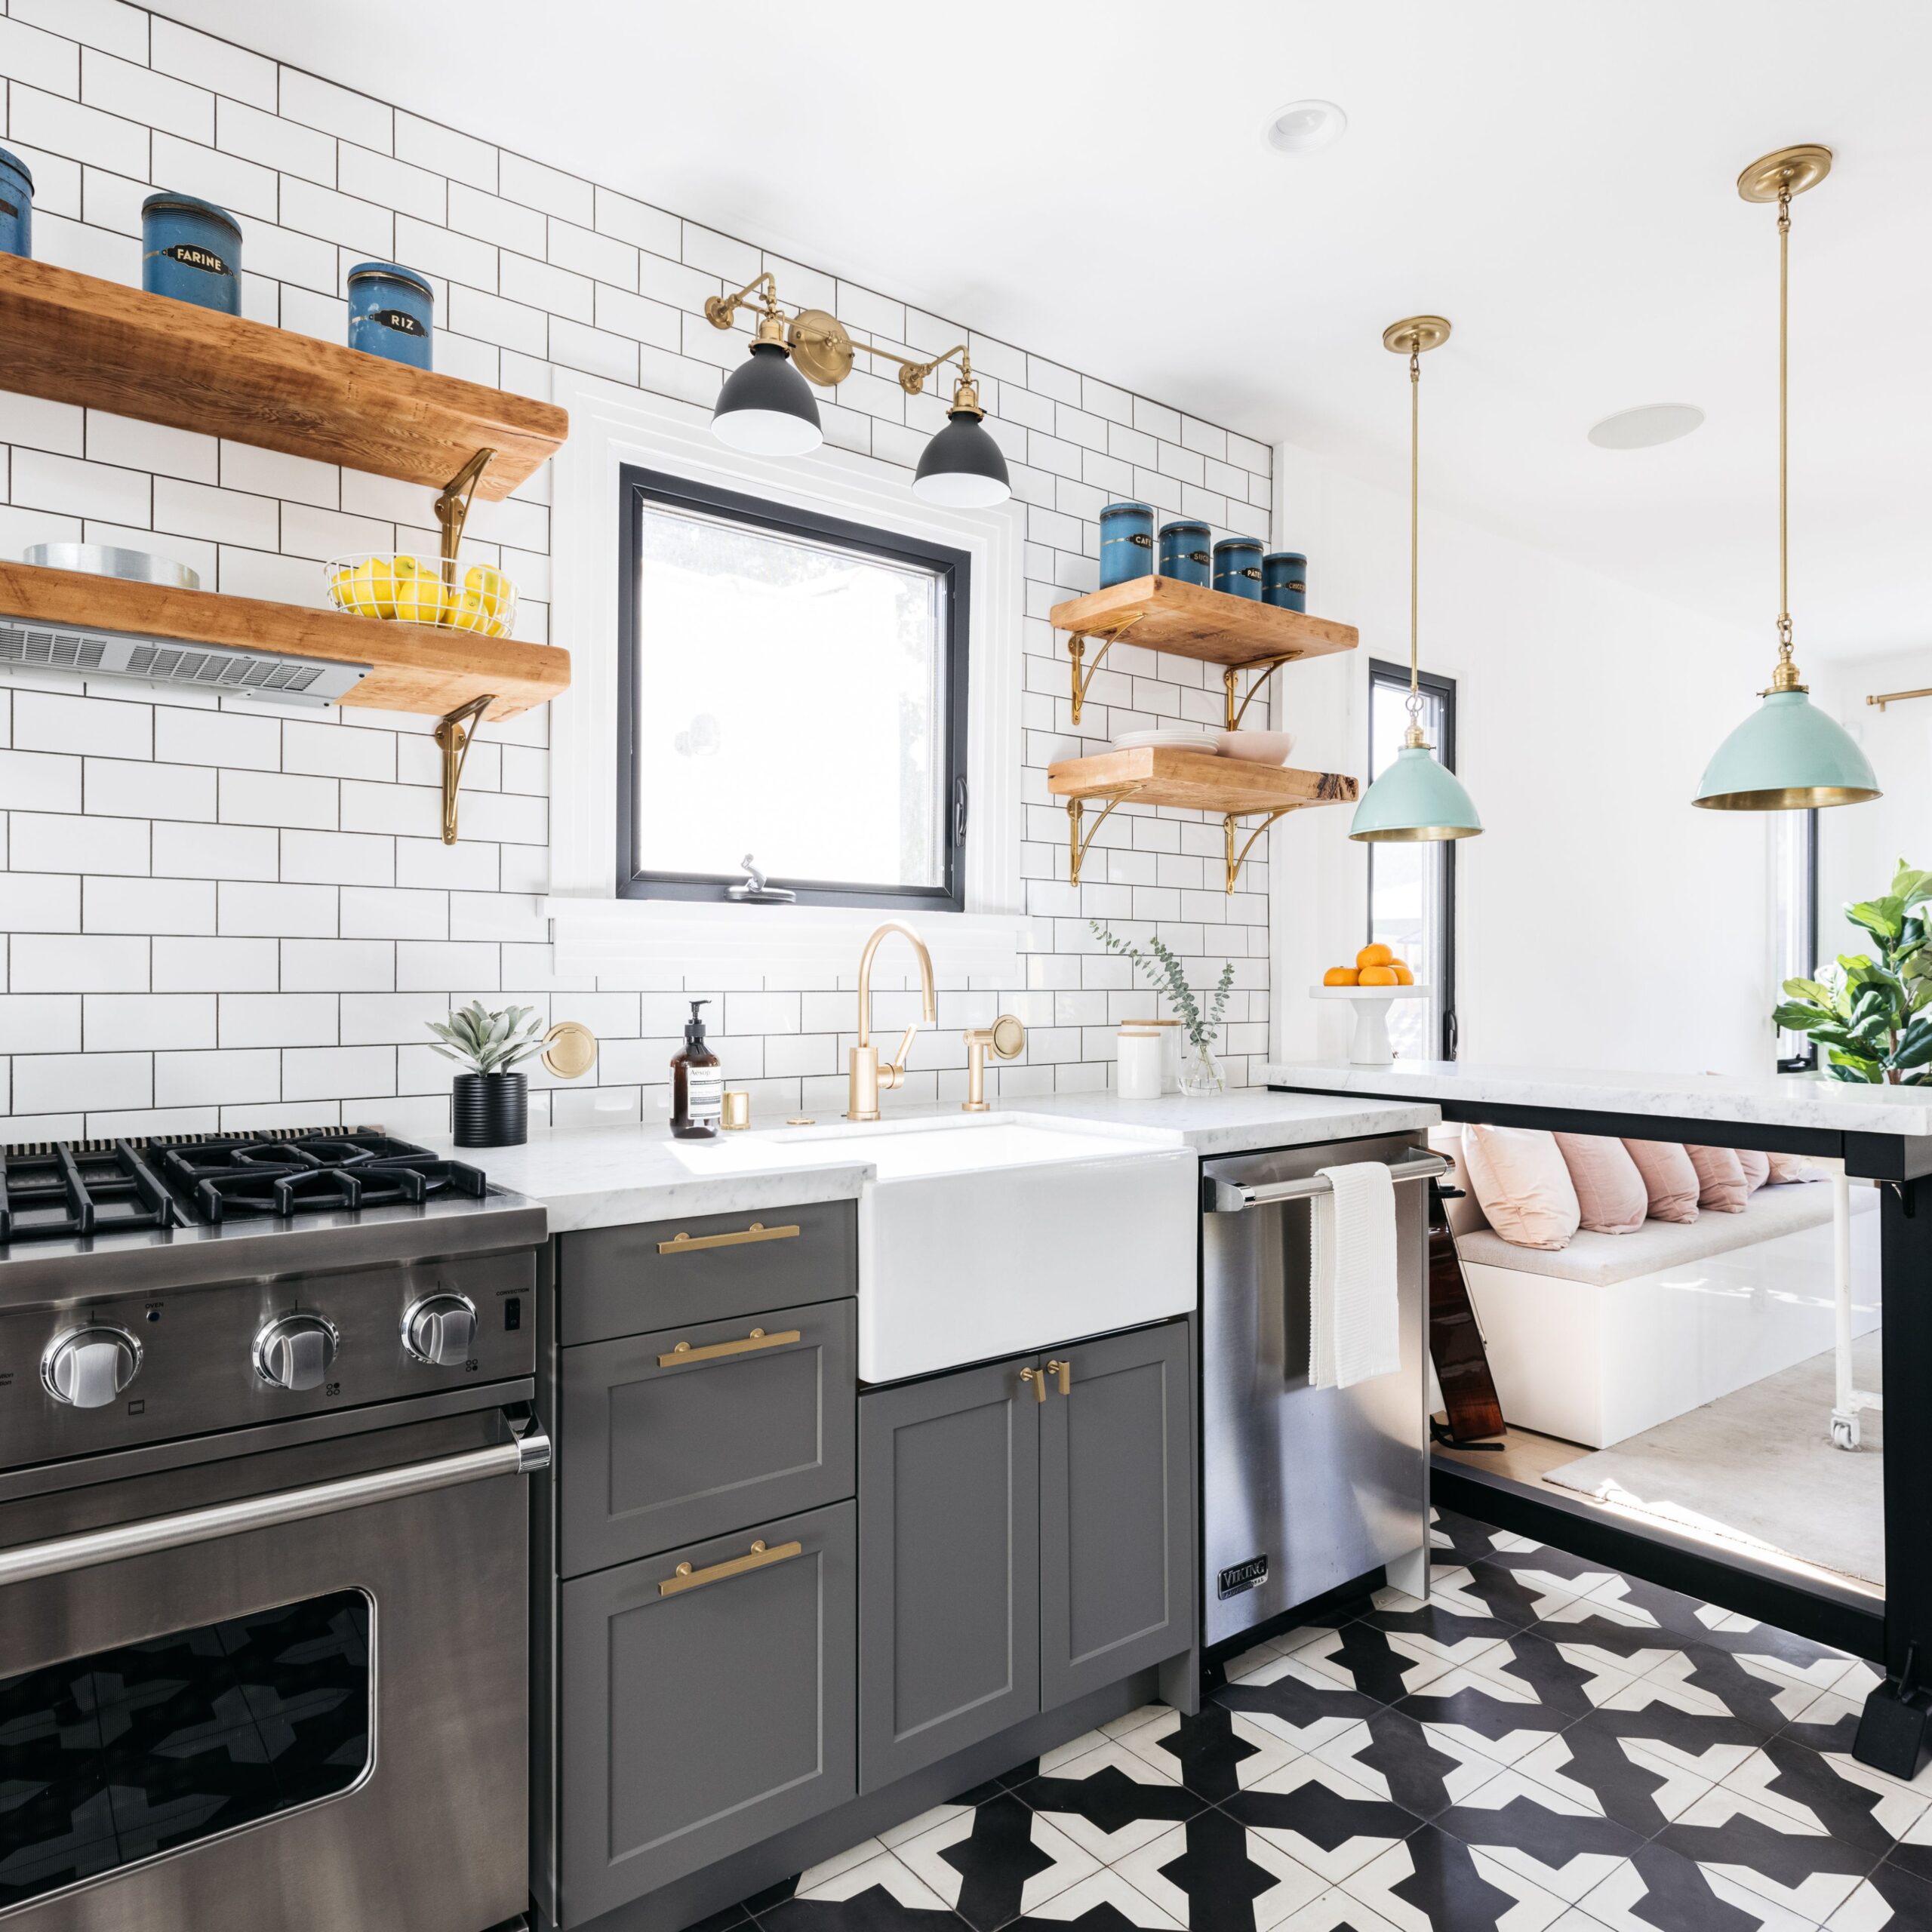 4 Inspiring Gray Kitchen Design Ideas - gray and white kitchen